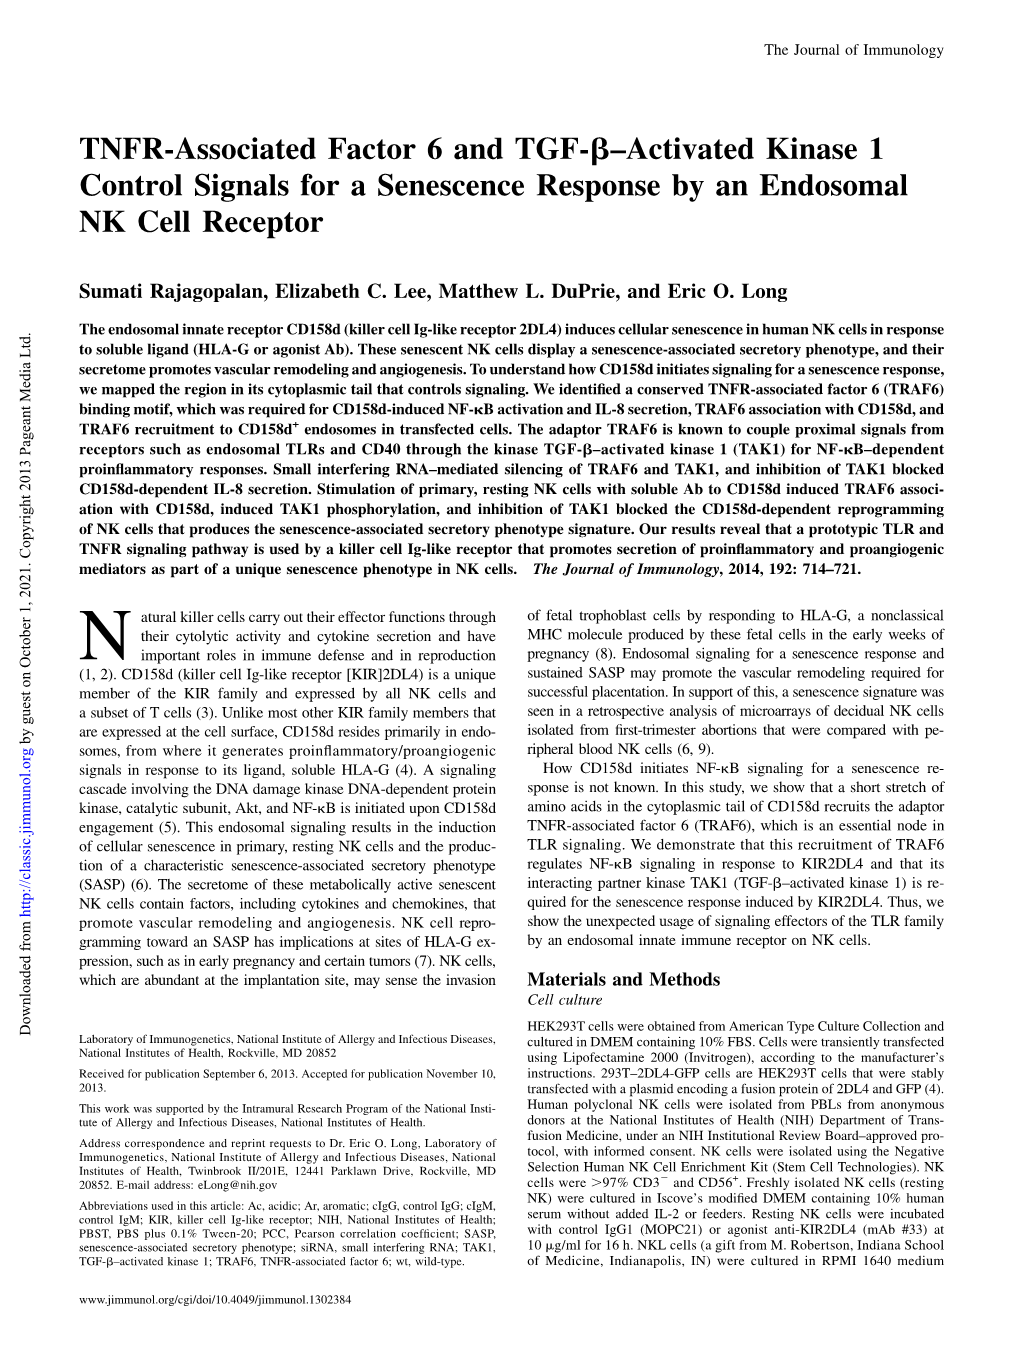 Cell Receptor Senescence Response by an Endosomal NK Activated Kinase 1 Control Signals for A